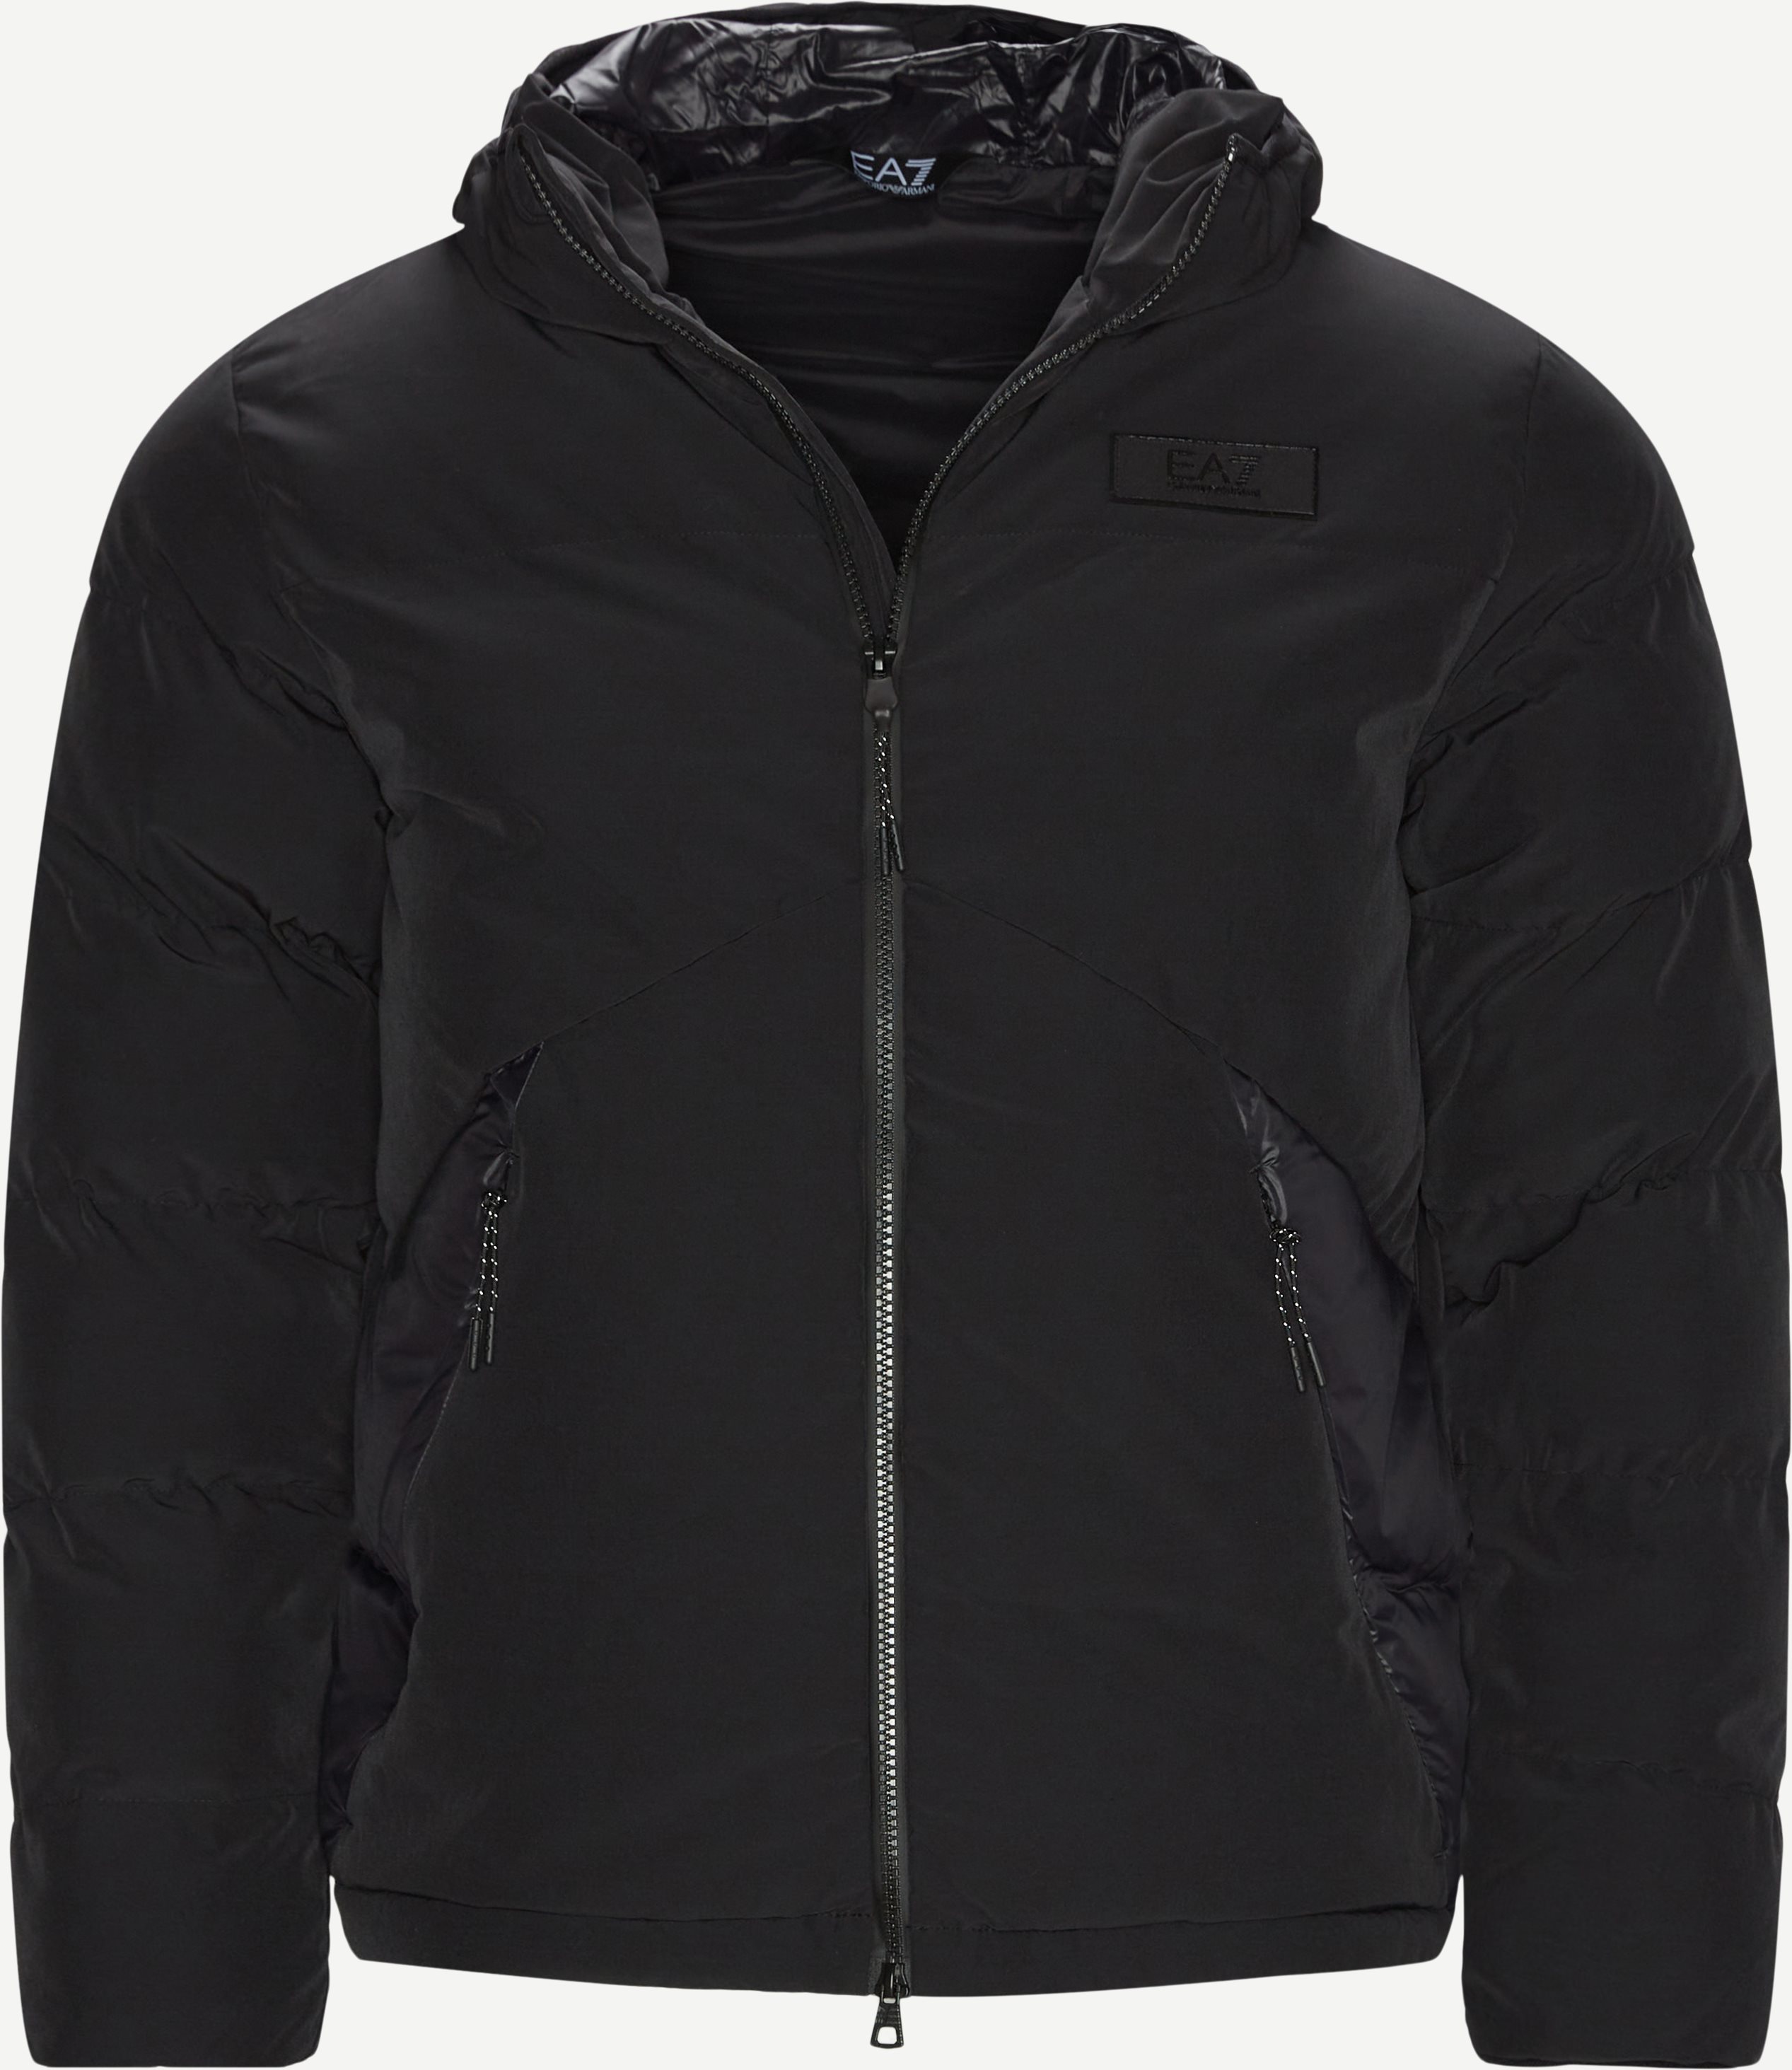 6KPB56 Winter jacket - Jackets - Regular fit - Black